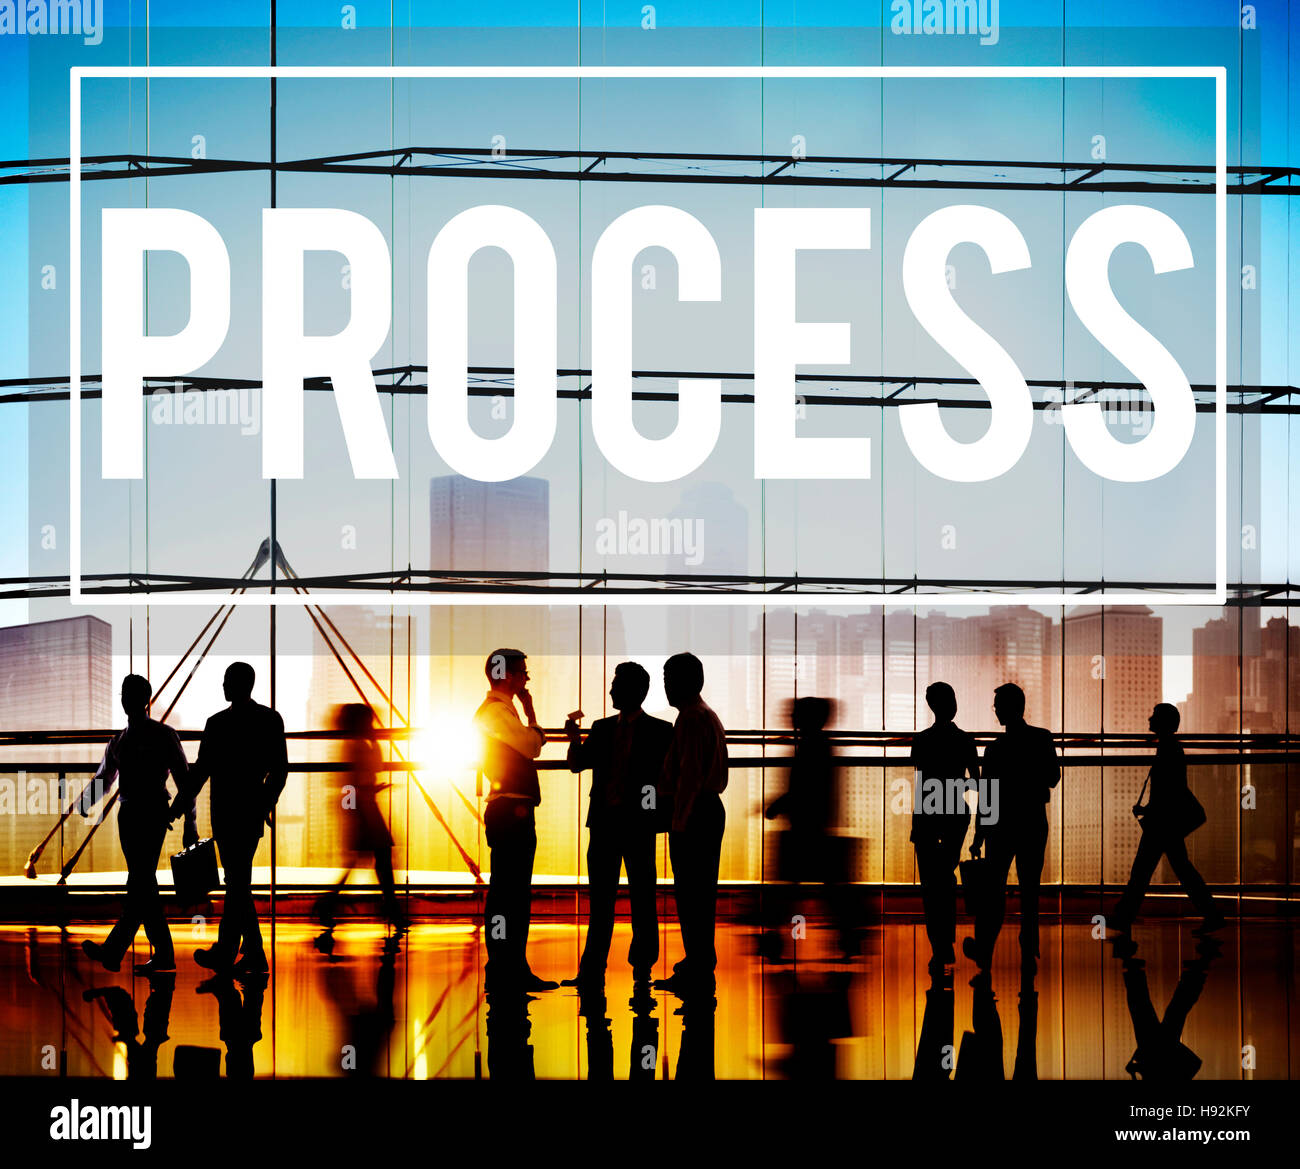 Process Determination Evaluate Improvement Steps Concept Stock Photo